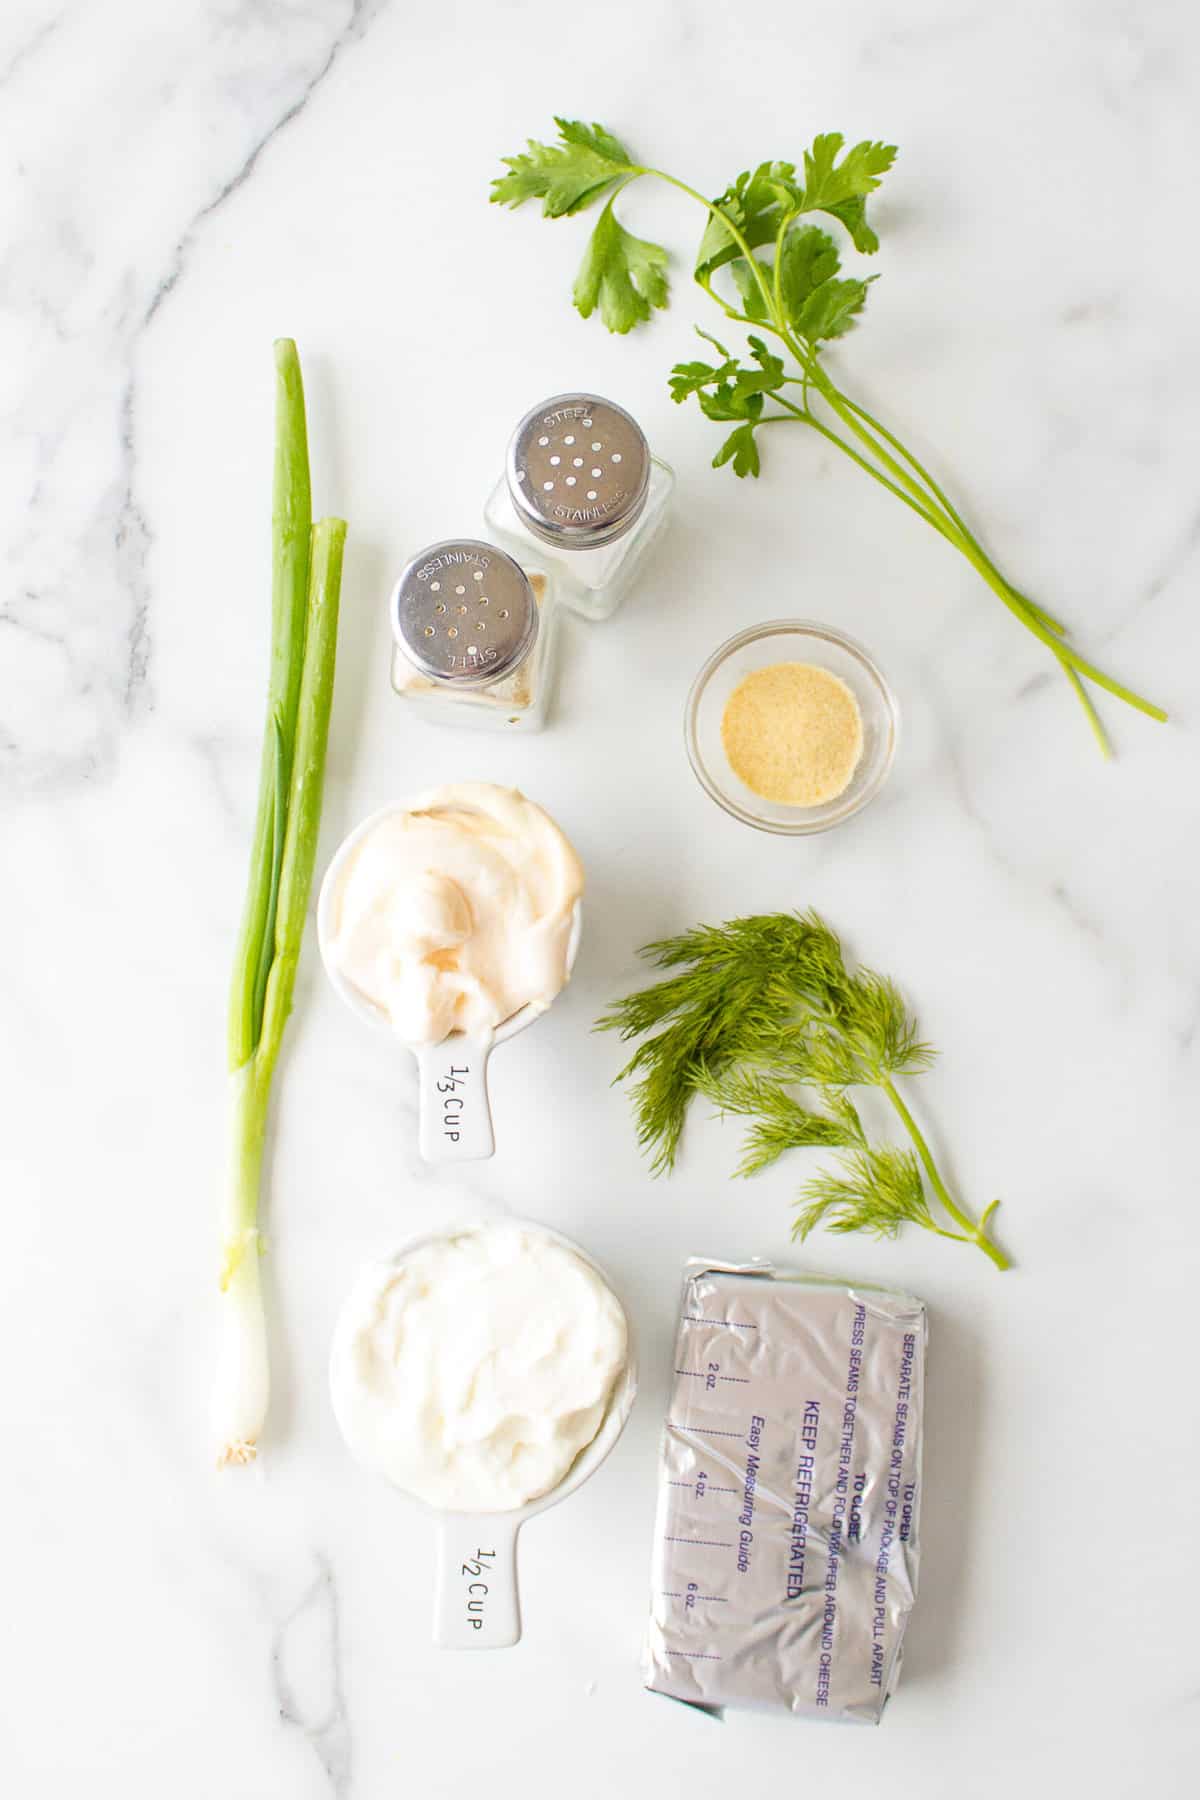 ingredients to make herb cream cheese dip